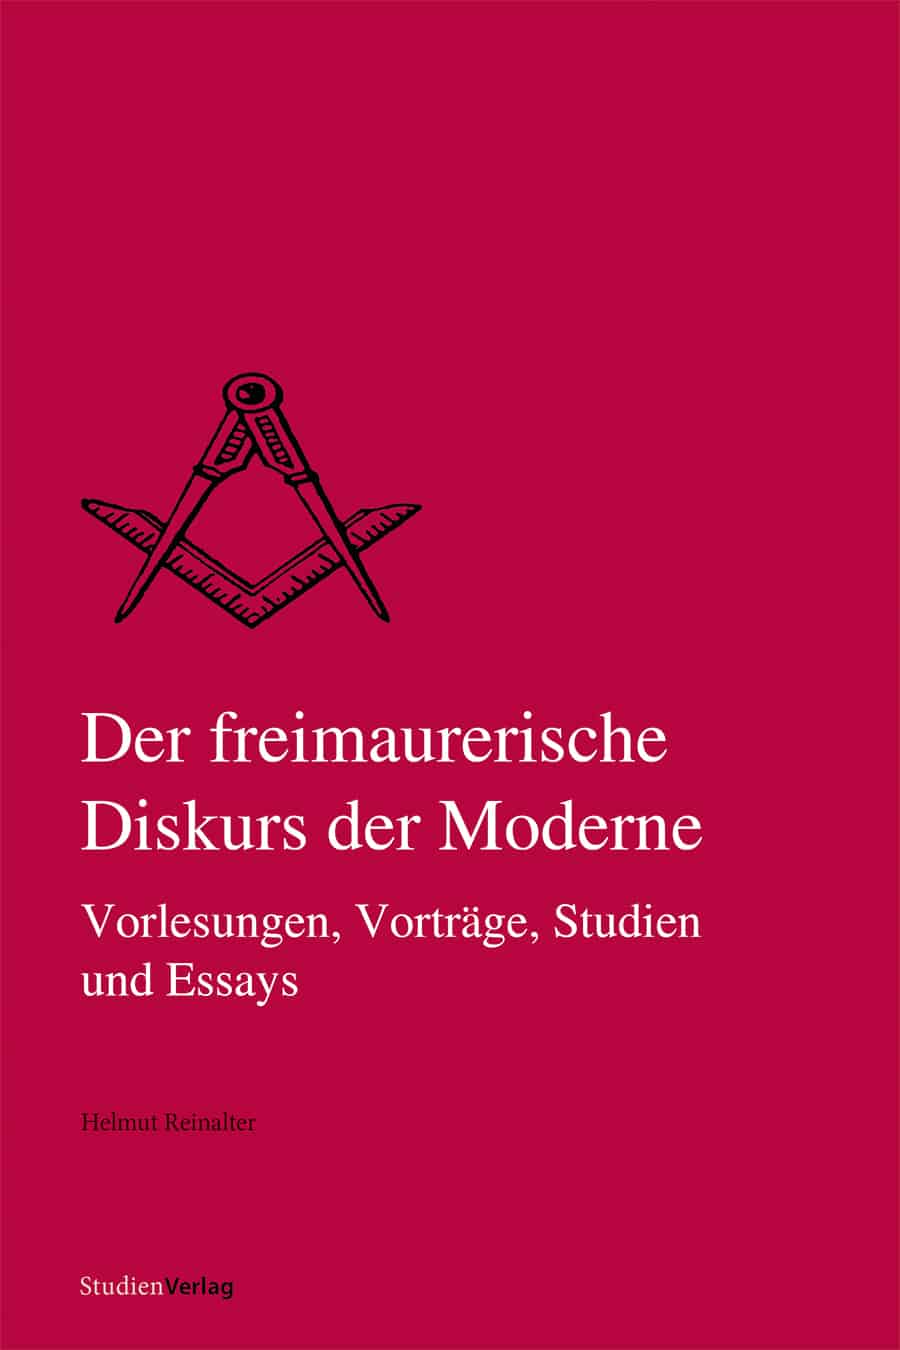 www.studienverlag.at